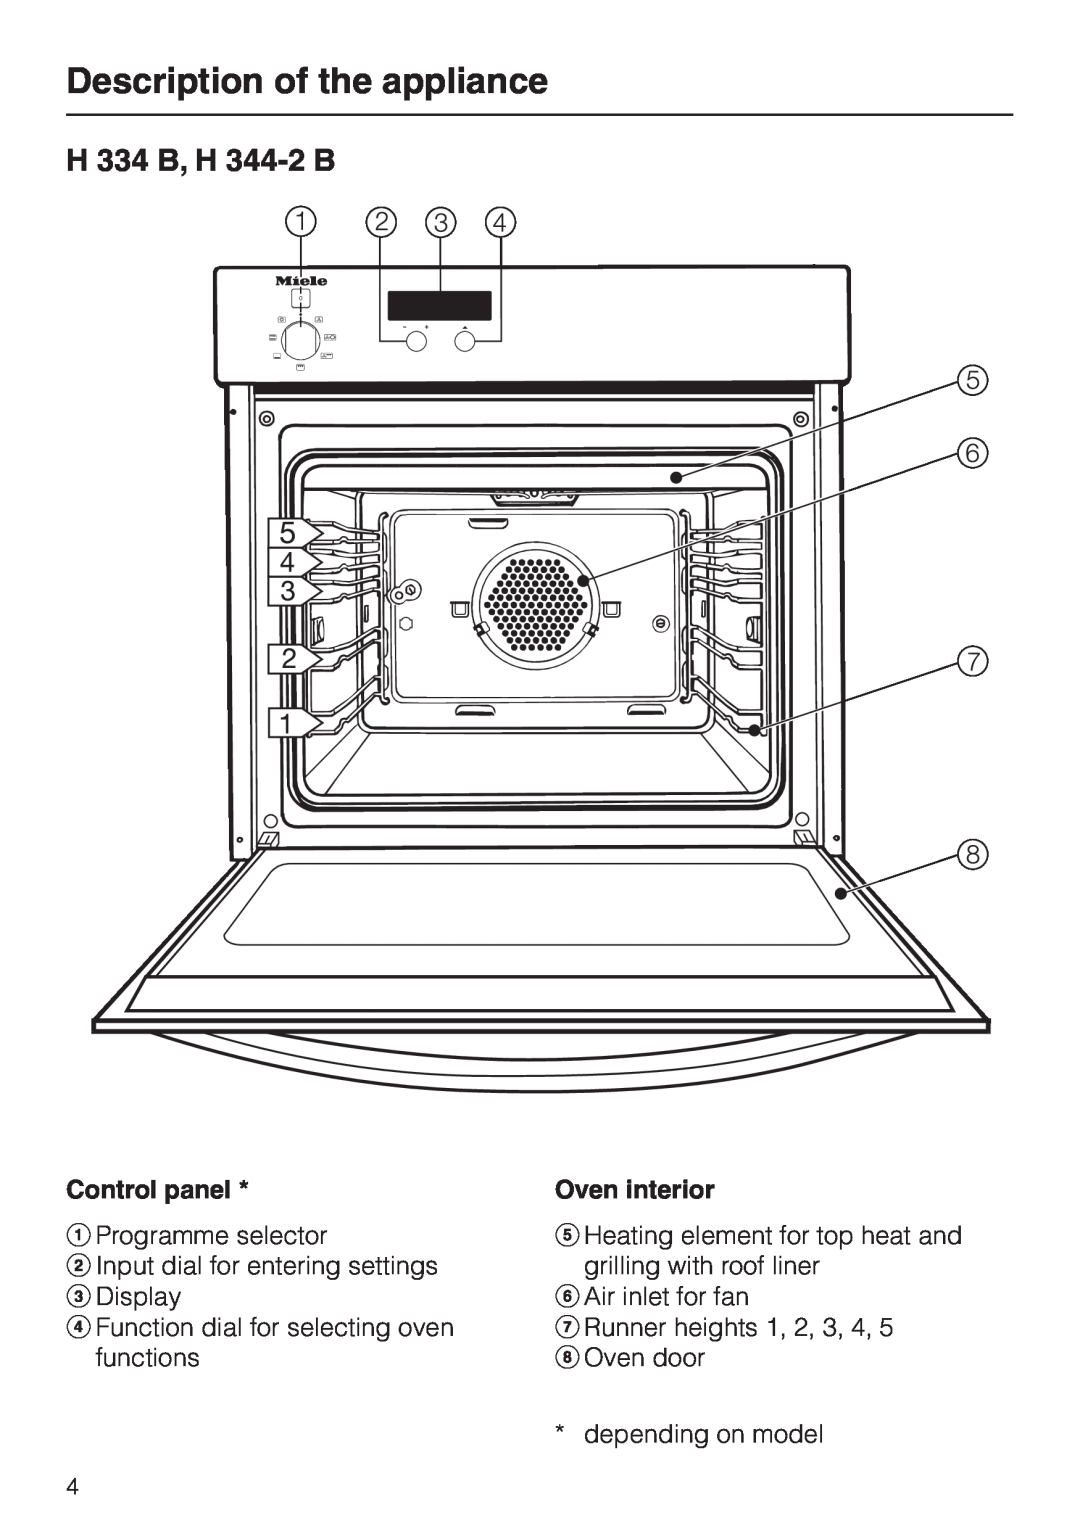 Miele H 344-2 B, H334B manual Description of the appliance, H 334 B, H 344-2B, Control panel, Oven interior 